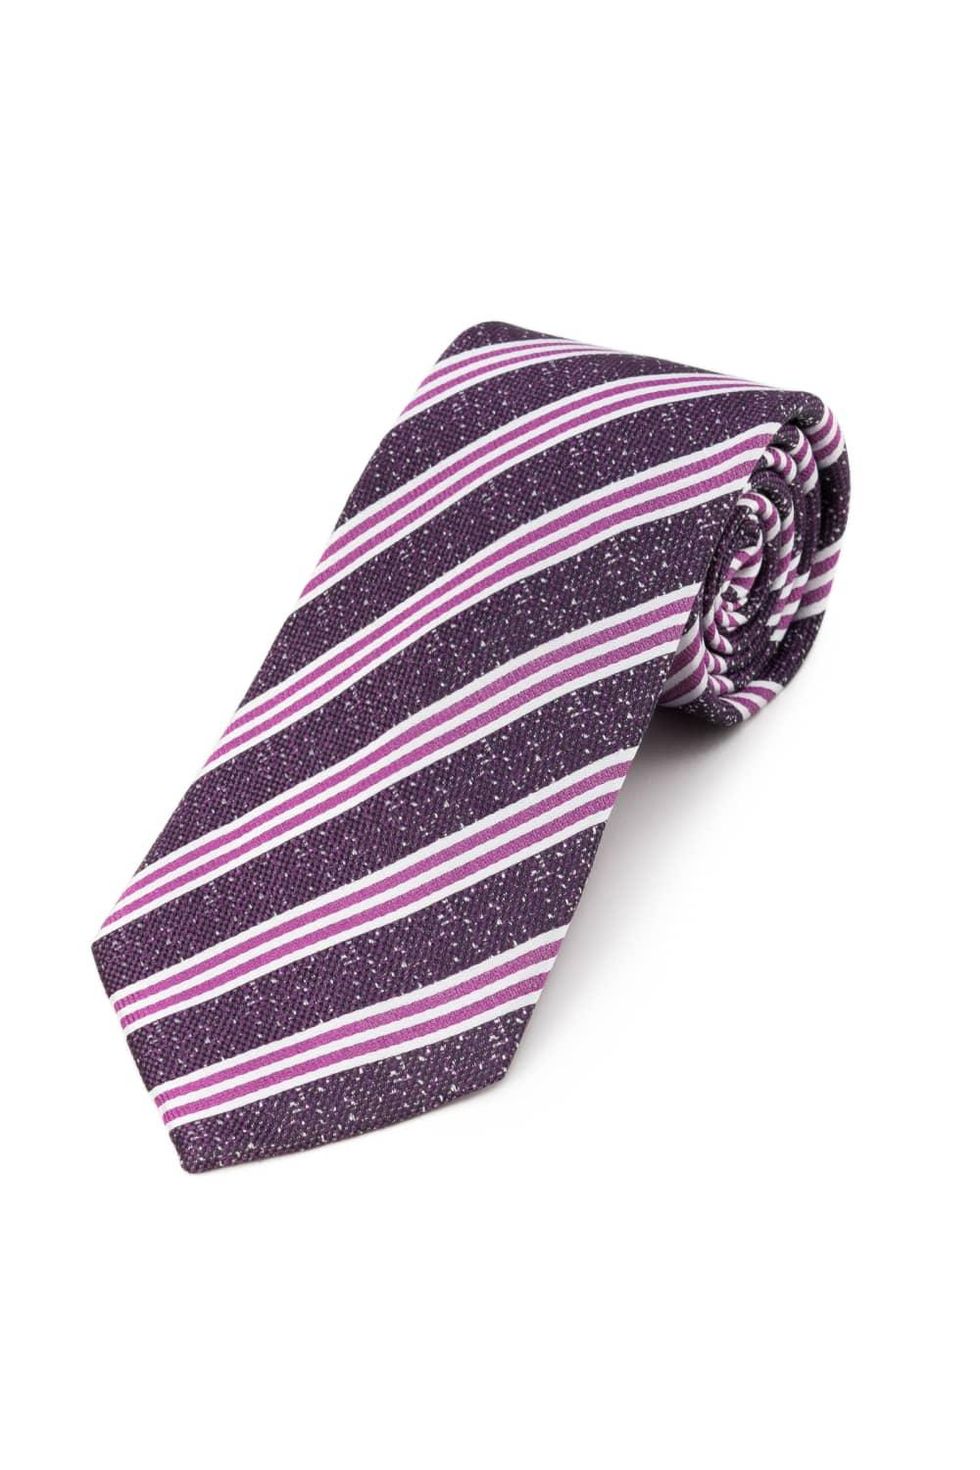 Regency Striped Purple and Plum Tie